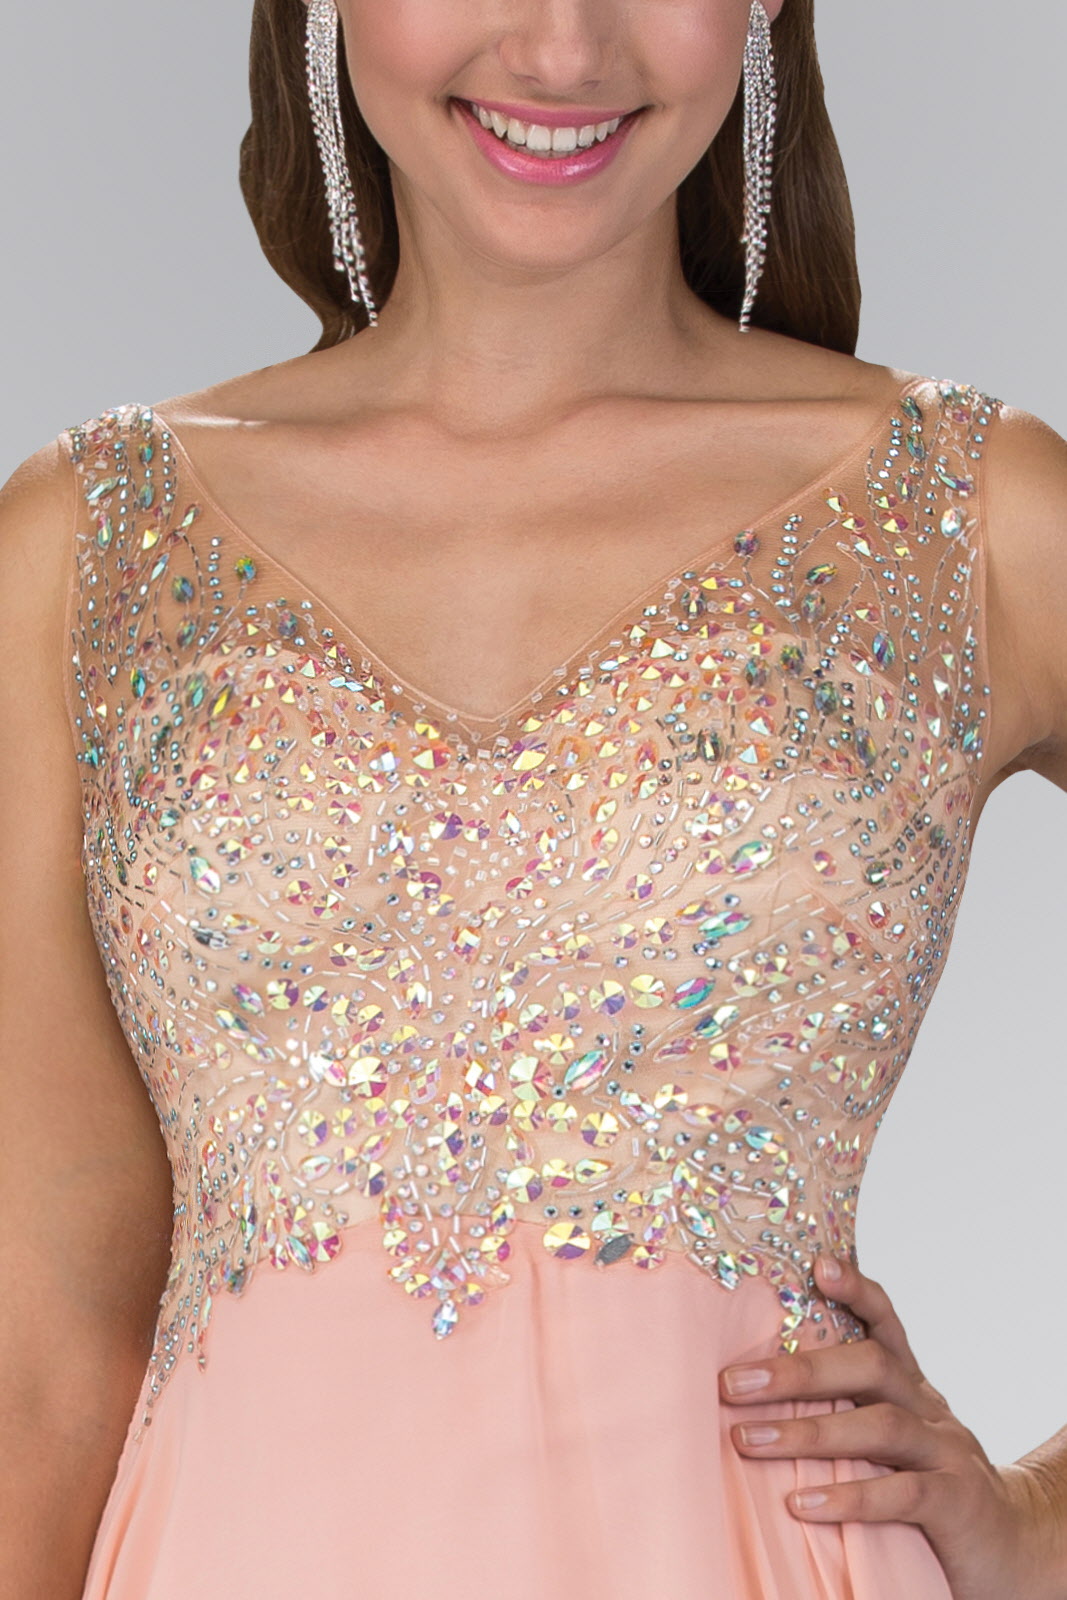 Long Formal Sleeeveless Chiffon Prom Dress - The Dress Outlet Elizabeth K Peach